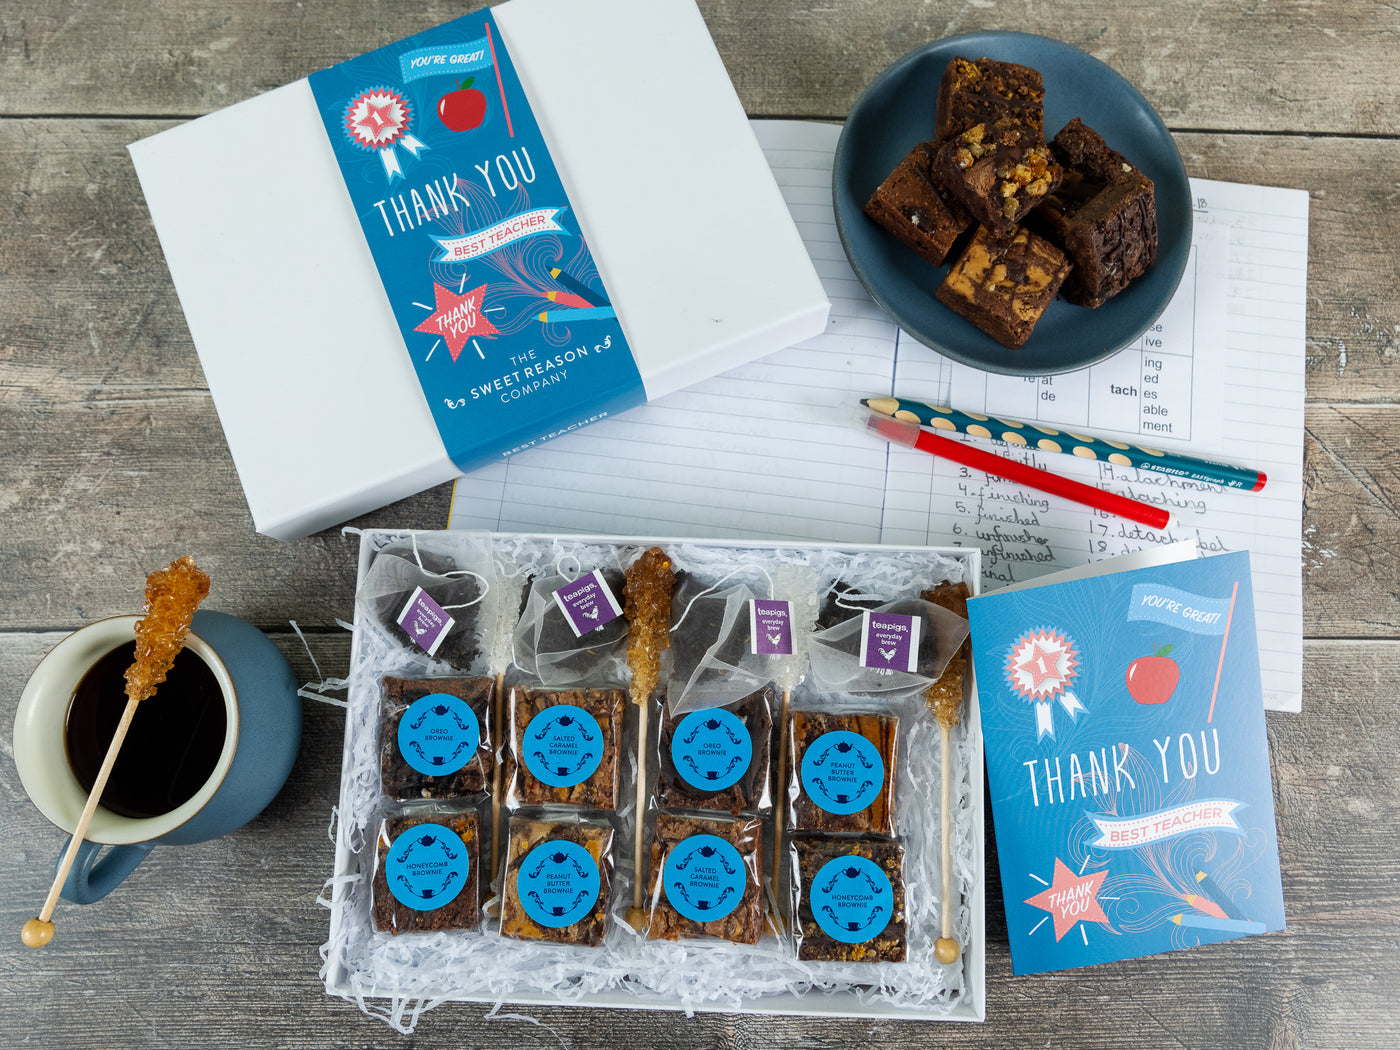 'Thank You Teacher' Vegan Afternoon Tea for Four Gift